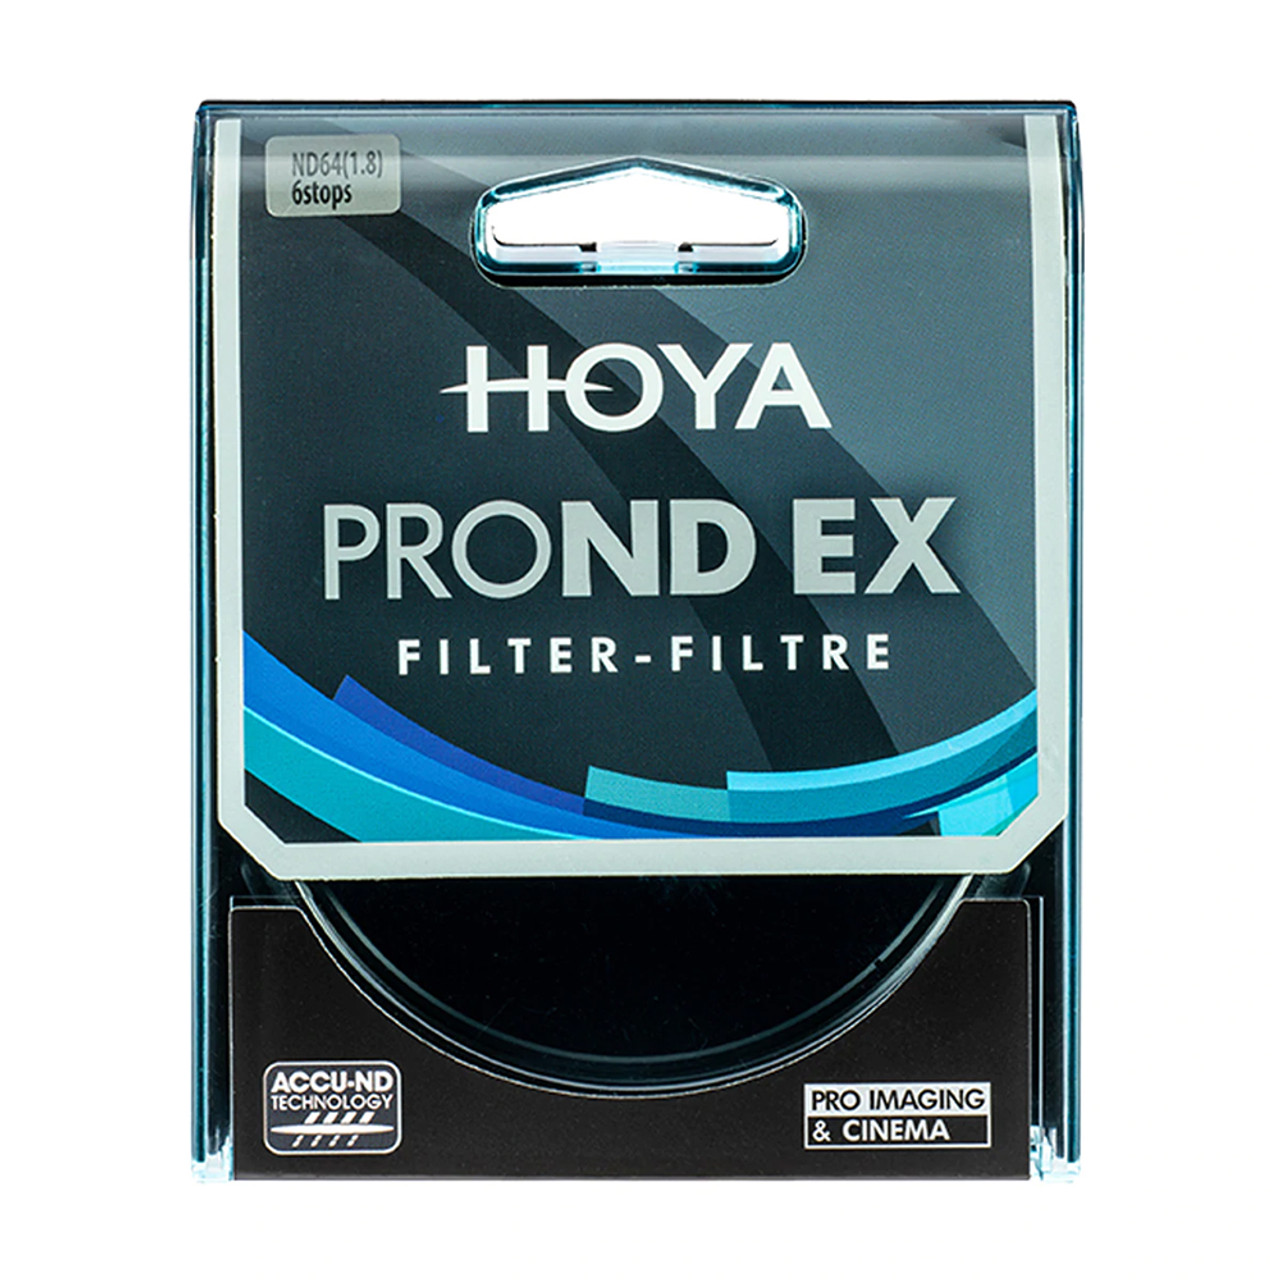 HOYA PROND EX 64 (6-STOPS) (58MM)